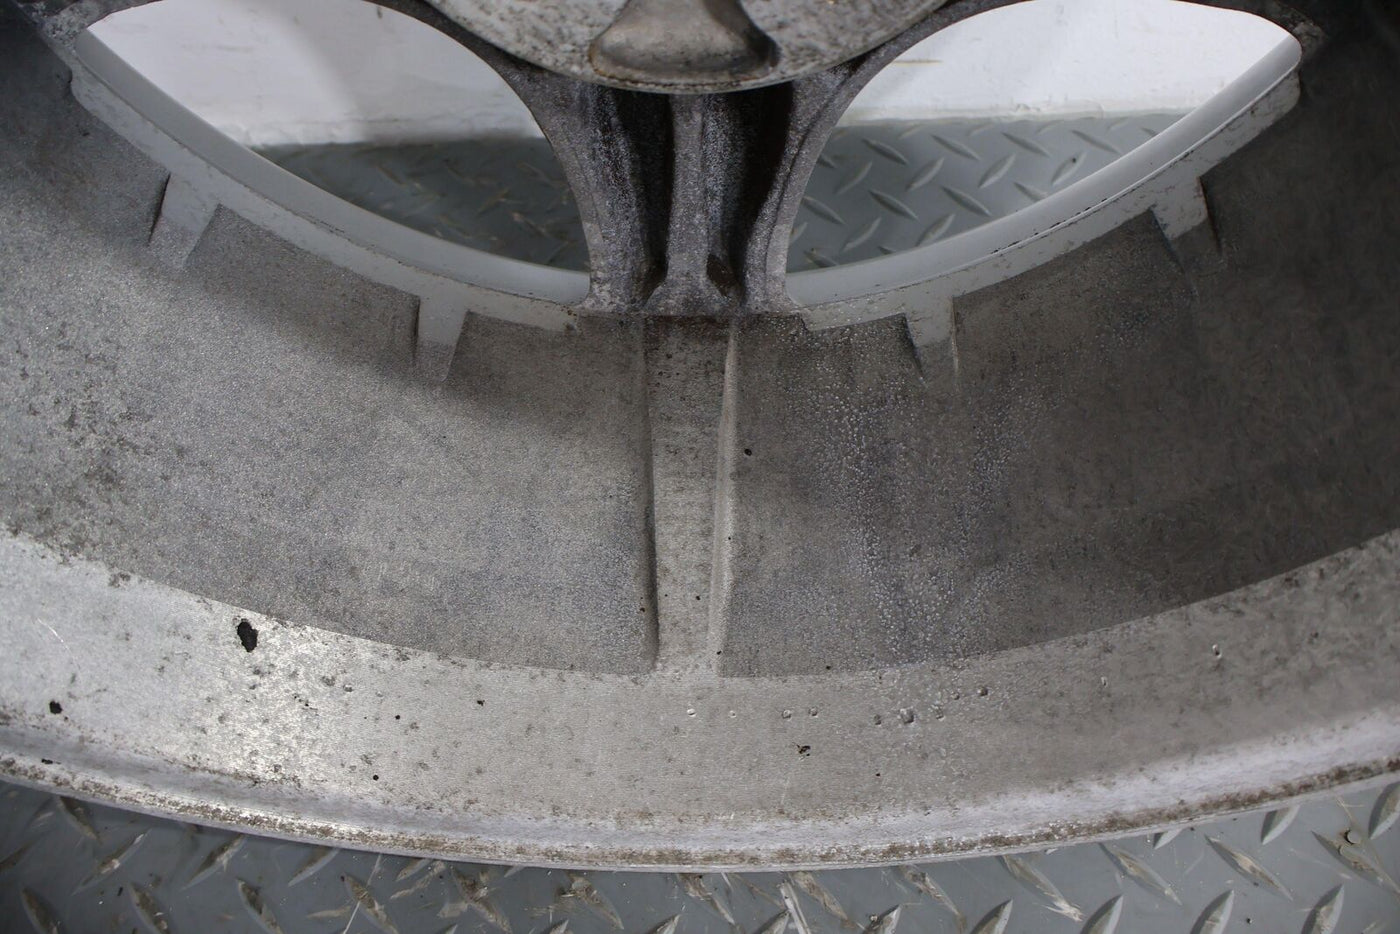 91-92 Toyota Supra MK3 Turbo 16x7 OEM 5 Spoke Wheel W/Center Cap (Face Marks)